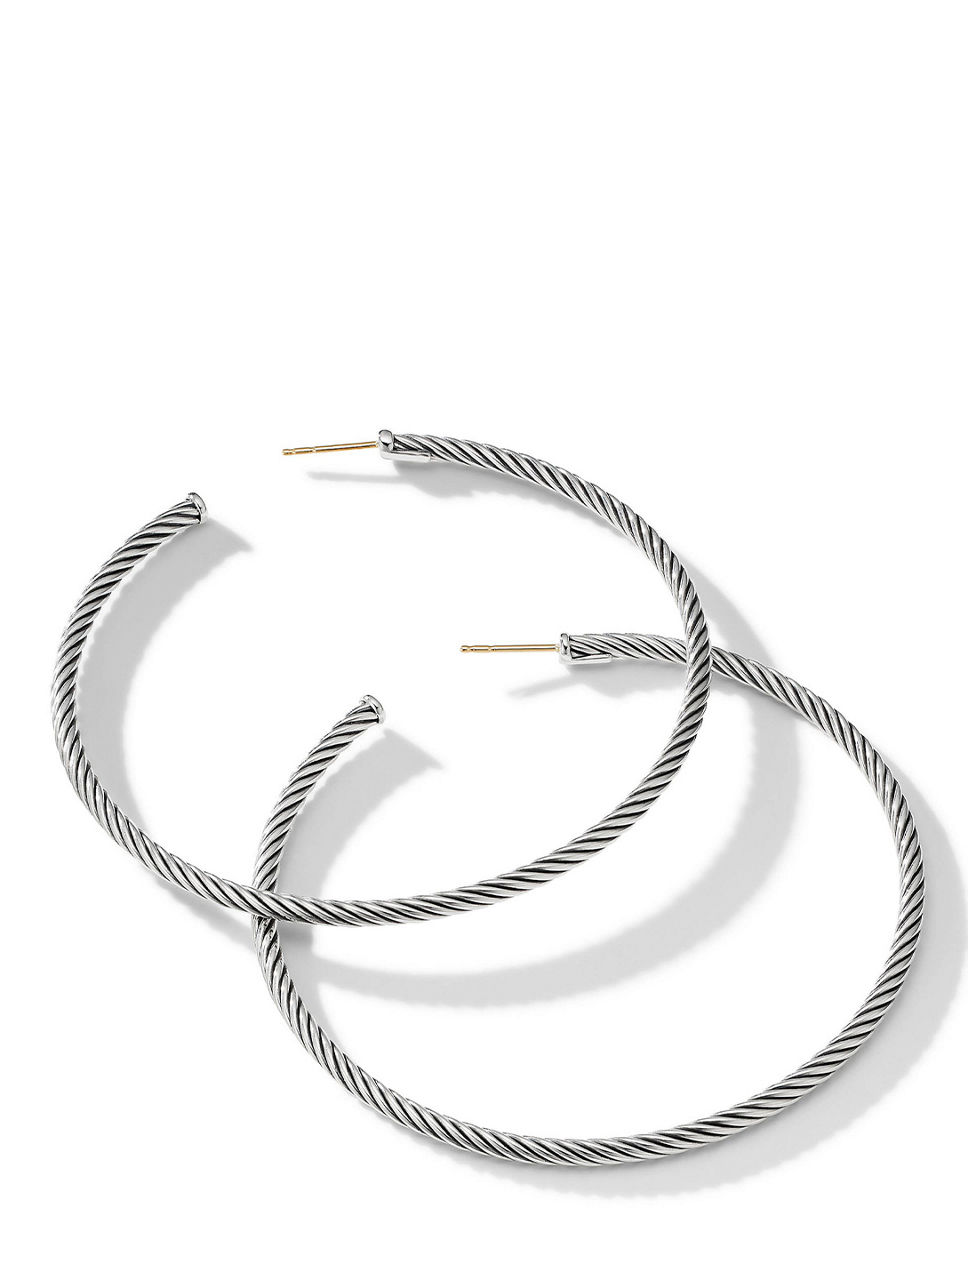 Sculpted Cable Hoop Earrings In Sterling Silver